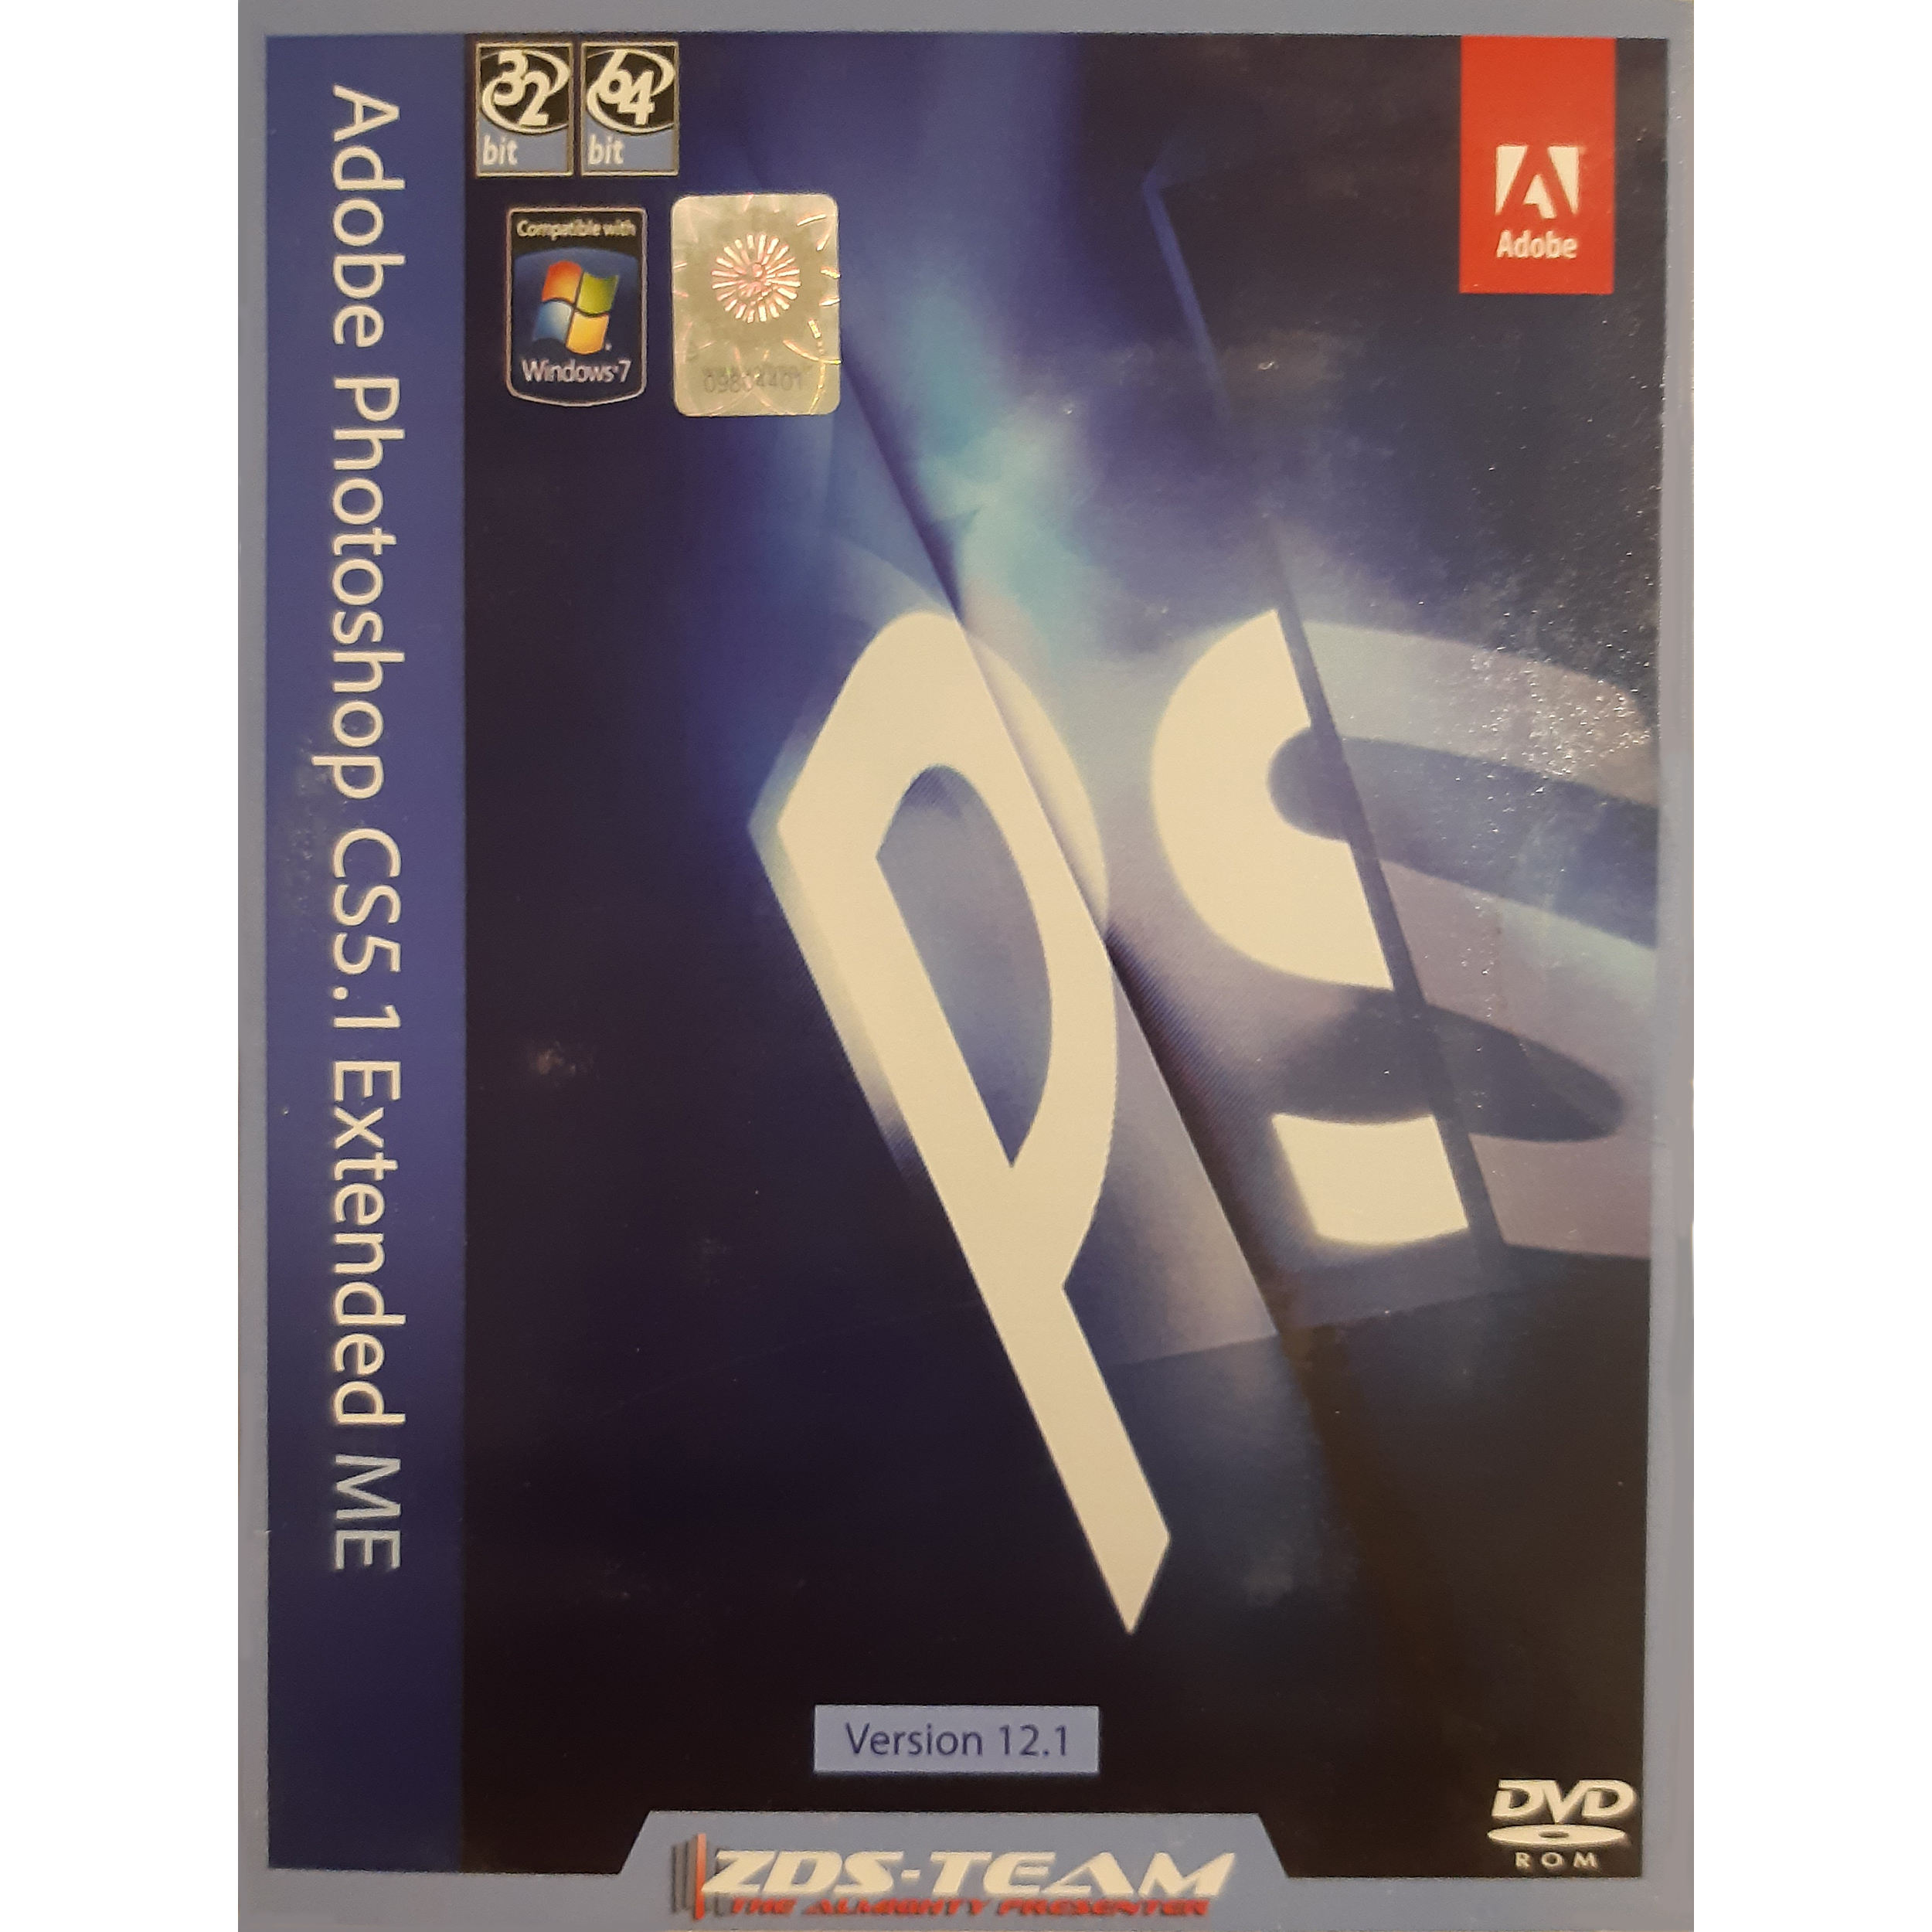 نرم افزار Adobe photoshop cs5.1 Extended ME نشر زد دی اس تیم